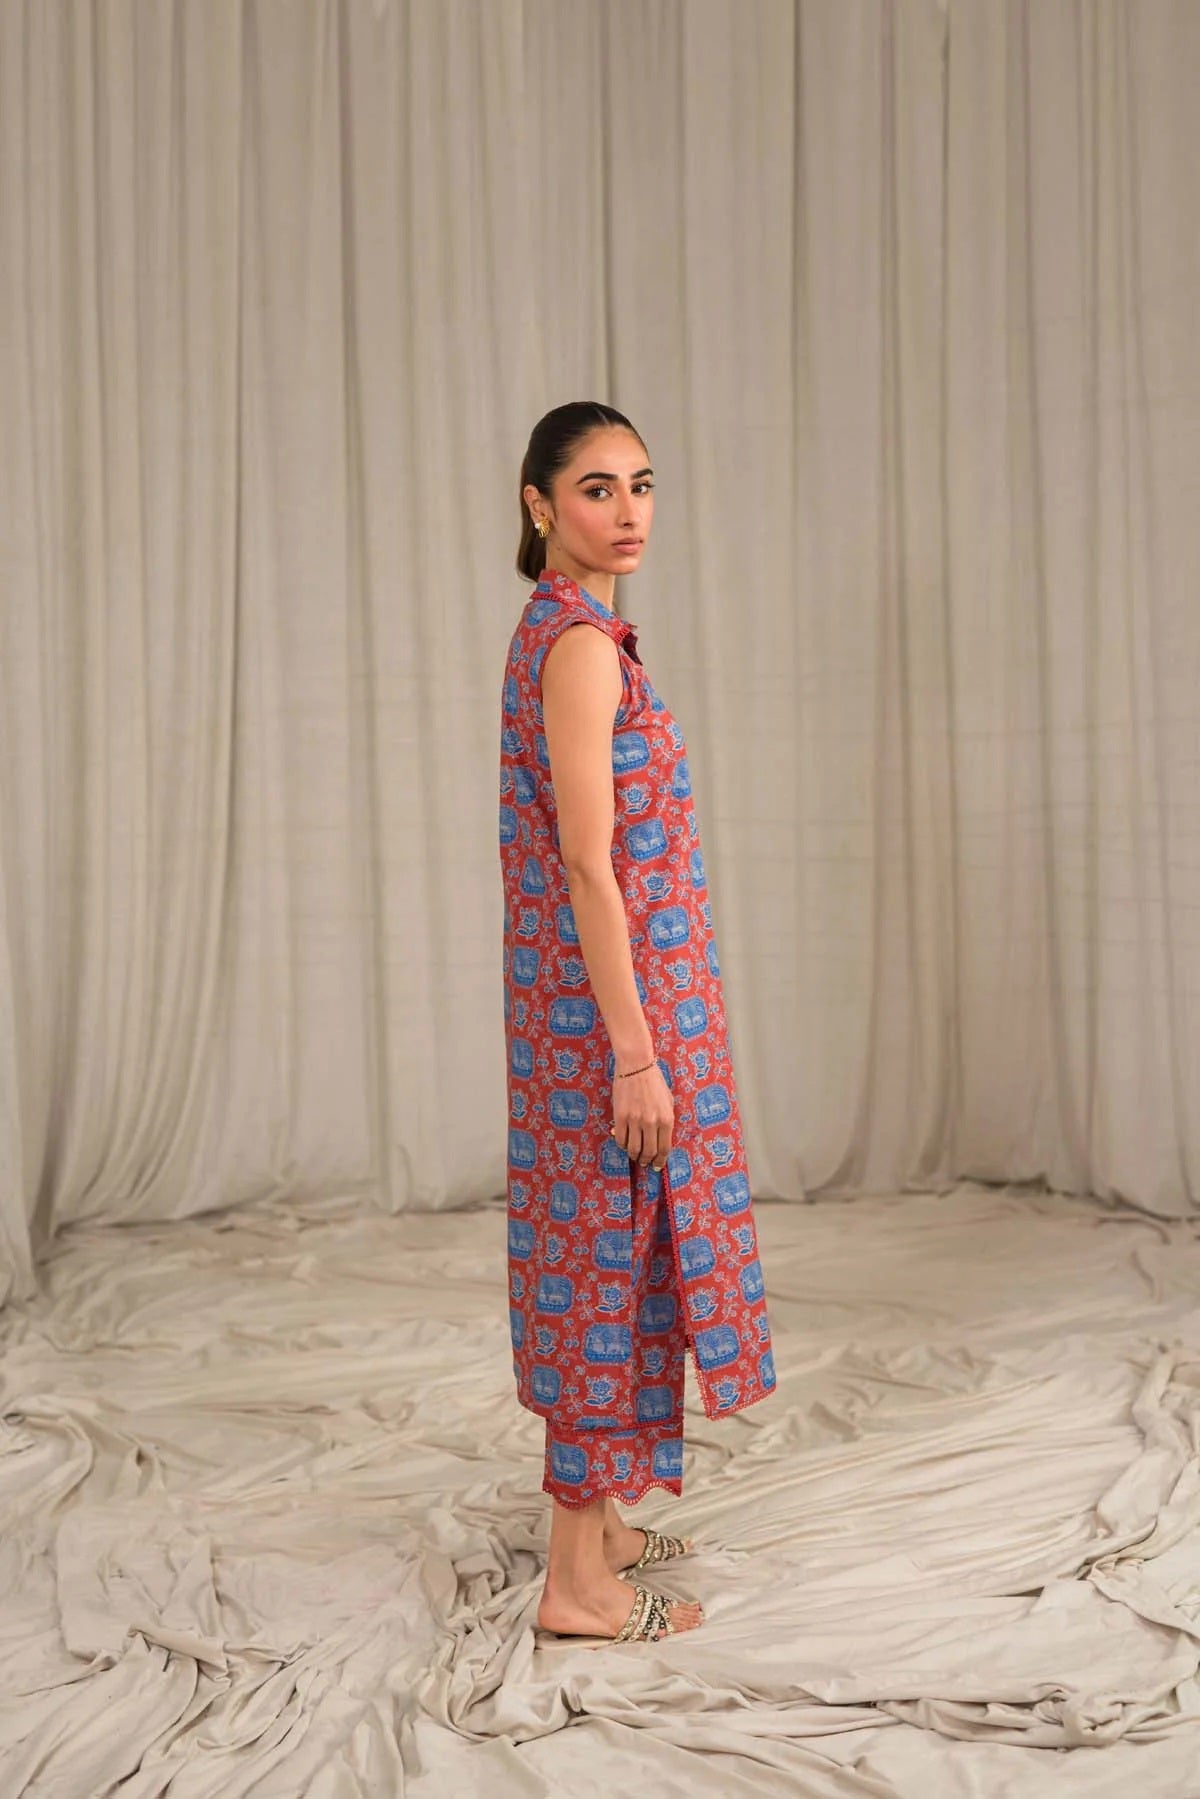 Sahar Printed Lawn Suits Unstitched 2 Piece SHR-S24-PL-V1-14 - Summer Collection